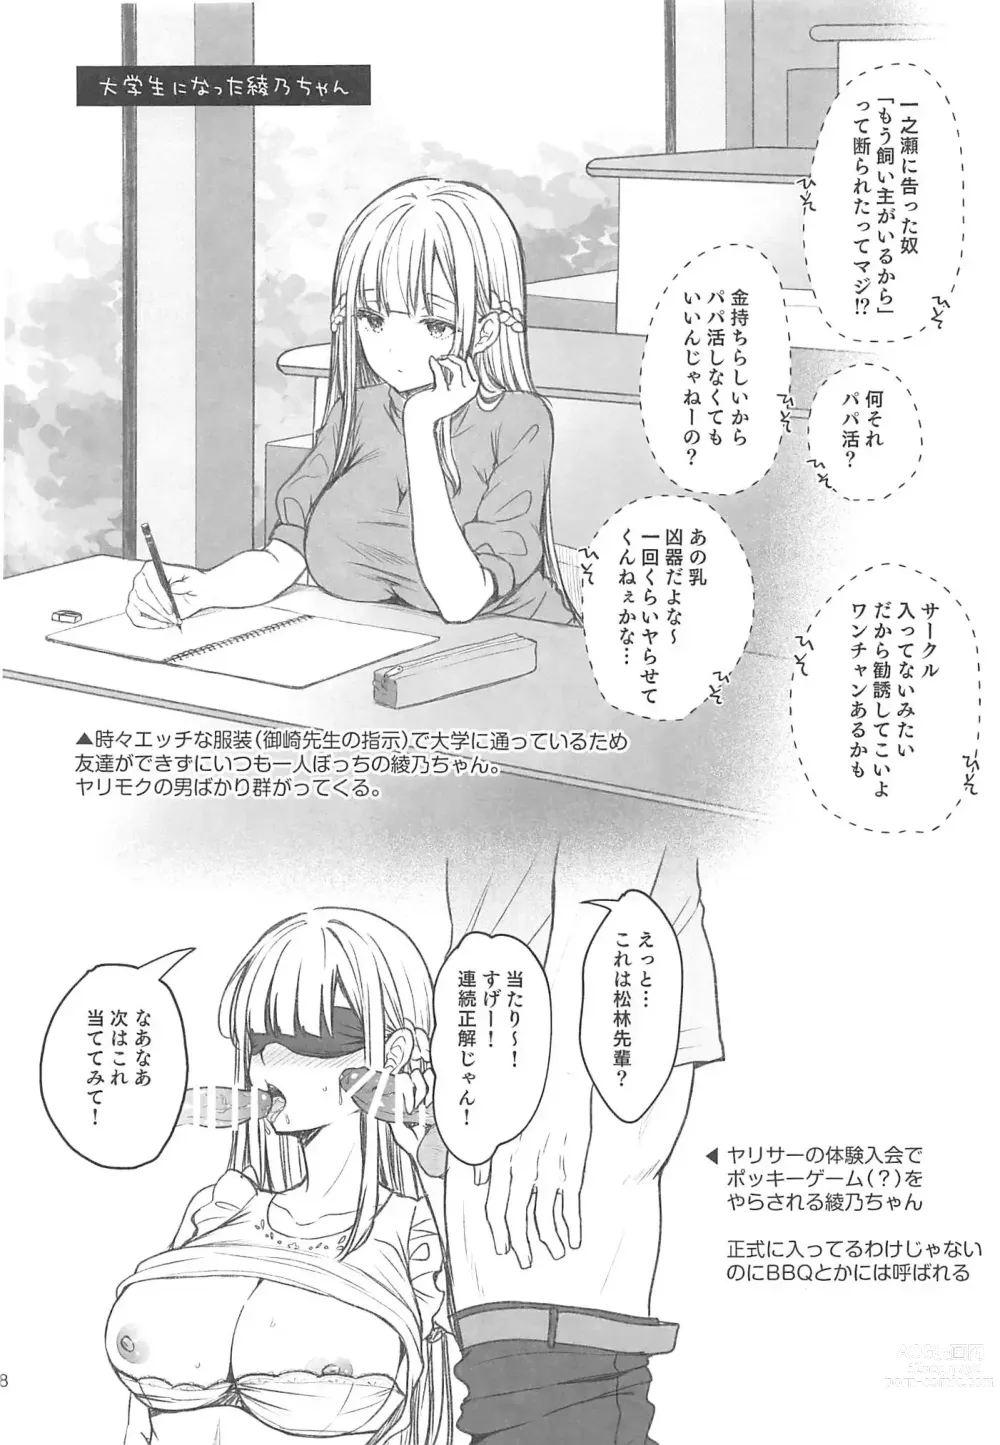 Page 401 of doujinshi Indeki No Reijou 1-8